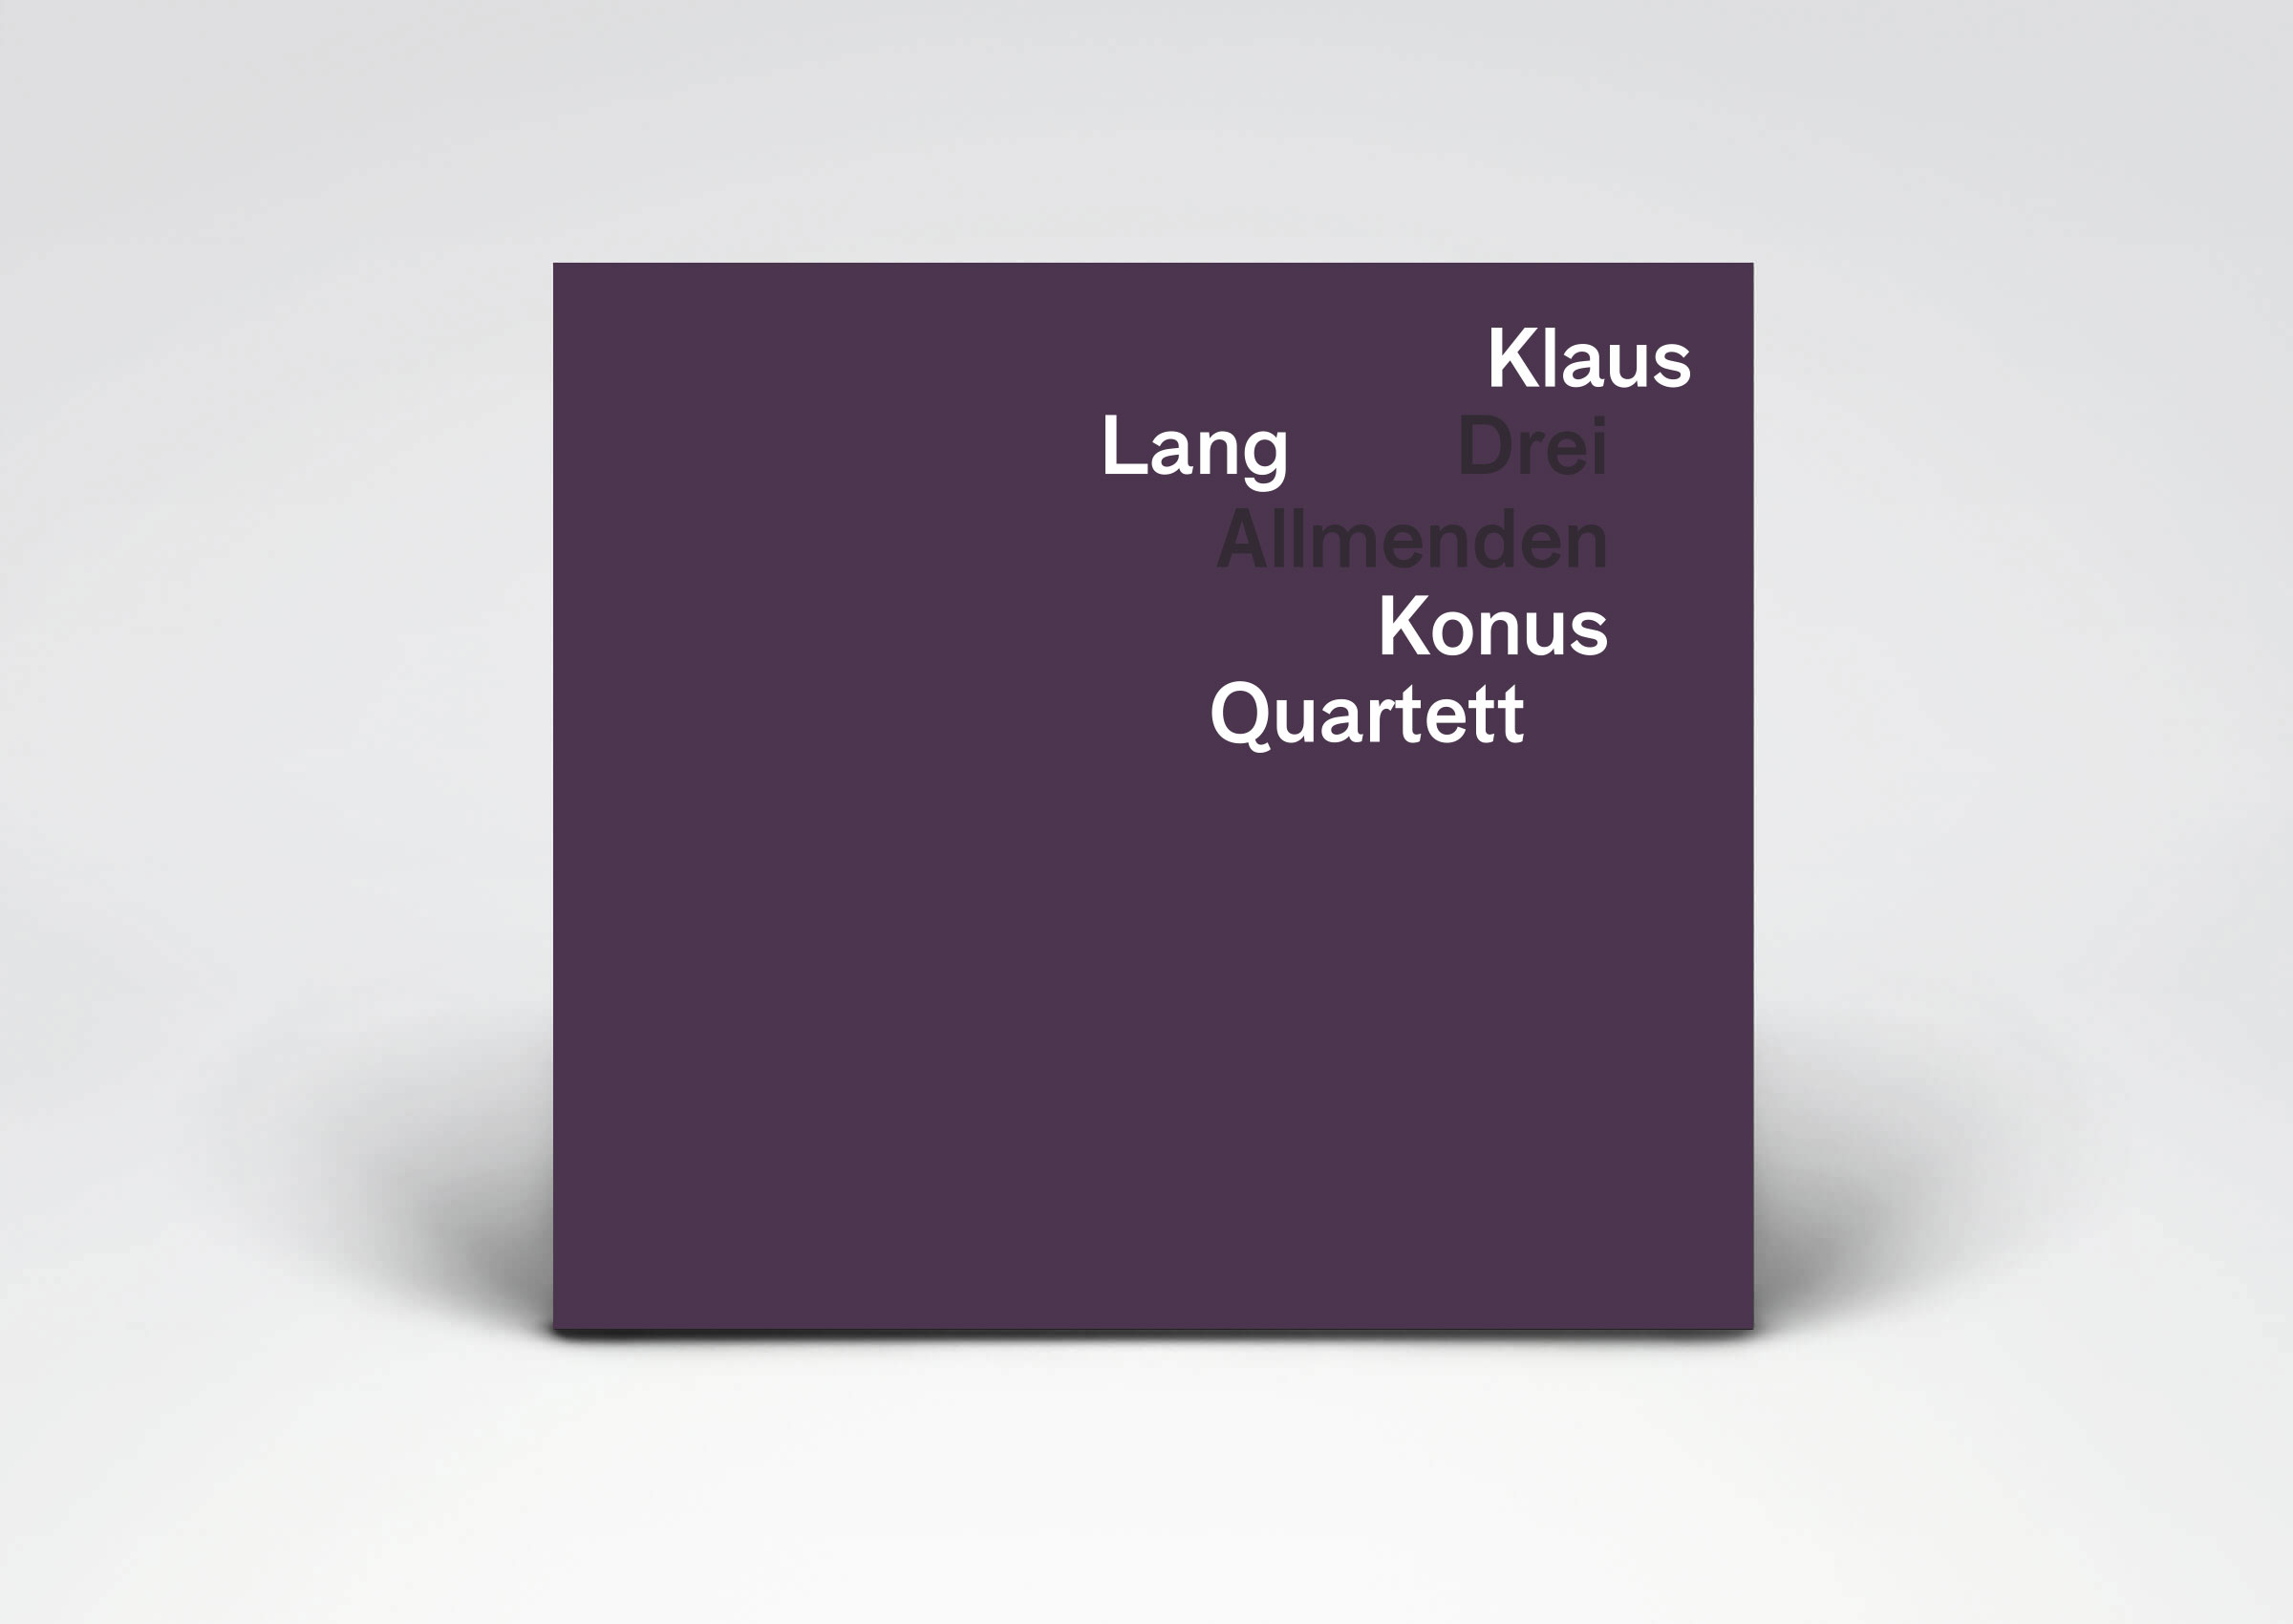 Klaus Lang & Konus Quartett